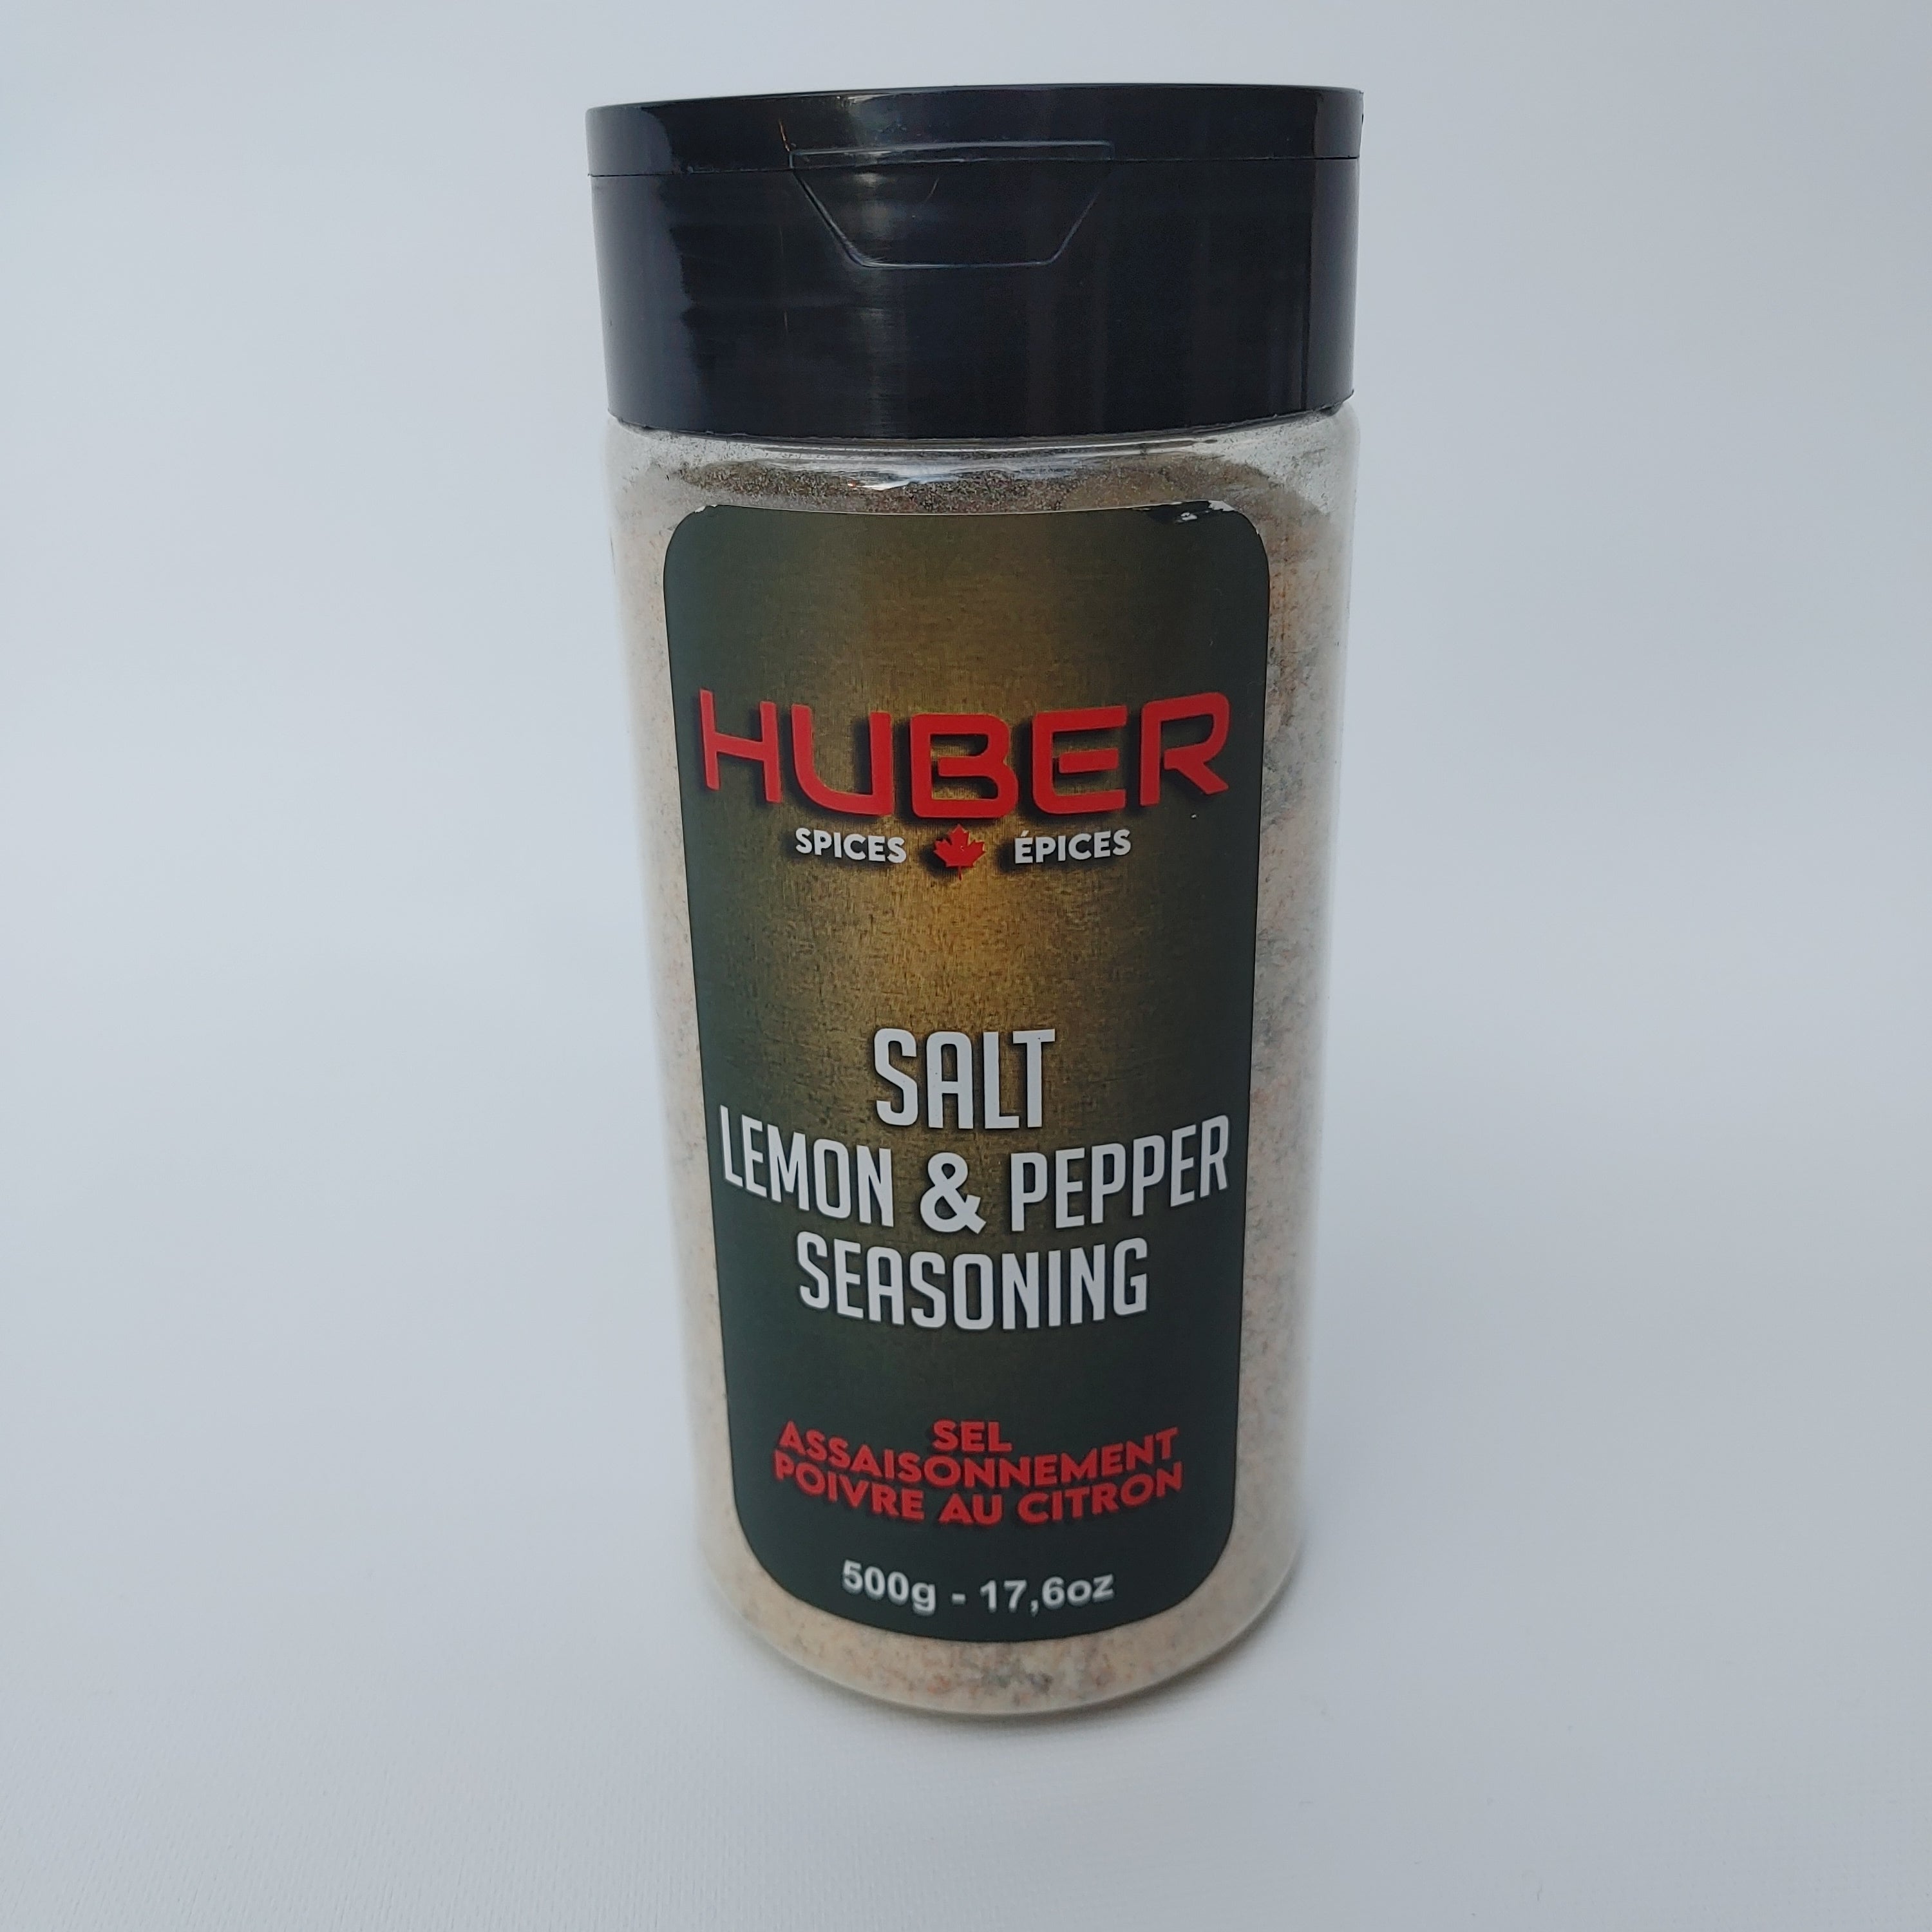 HUBER - Salt Lemon & Pepper Seasoning - FINAL SALE - EXPIRED or CLOSE TO EXPIRY